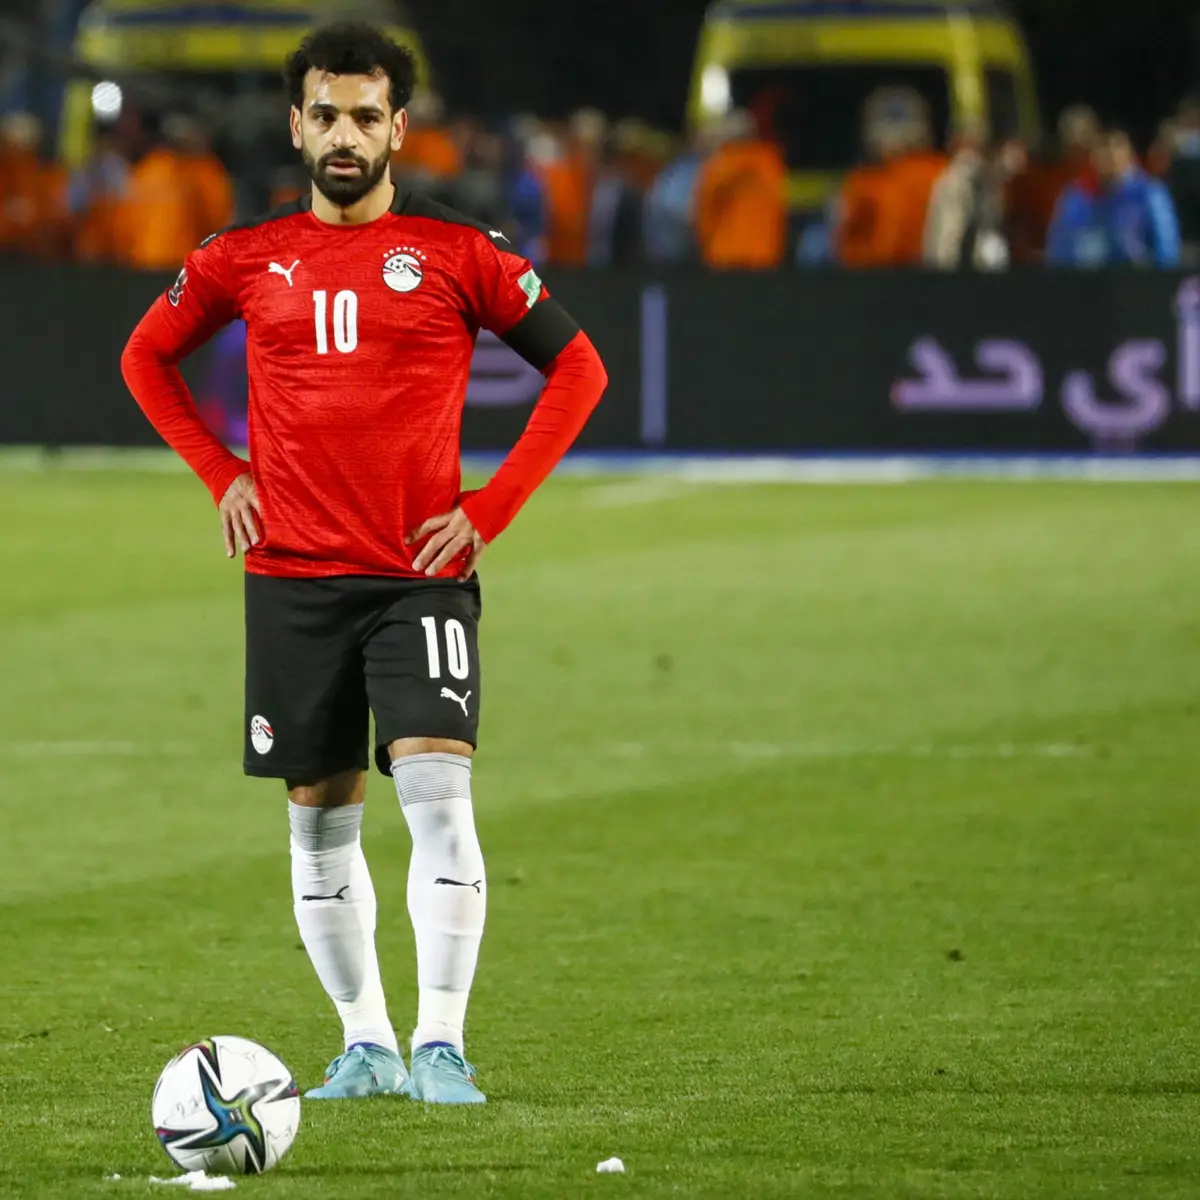 FIFA investiga lasers apontados à cara dos jogadores do Egito